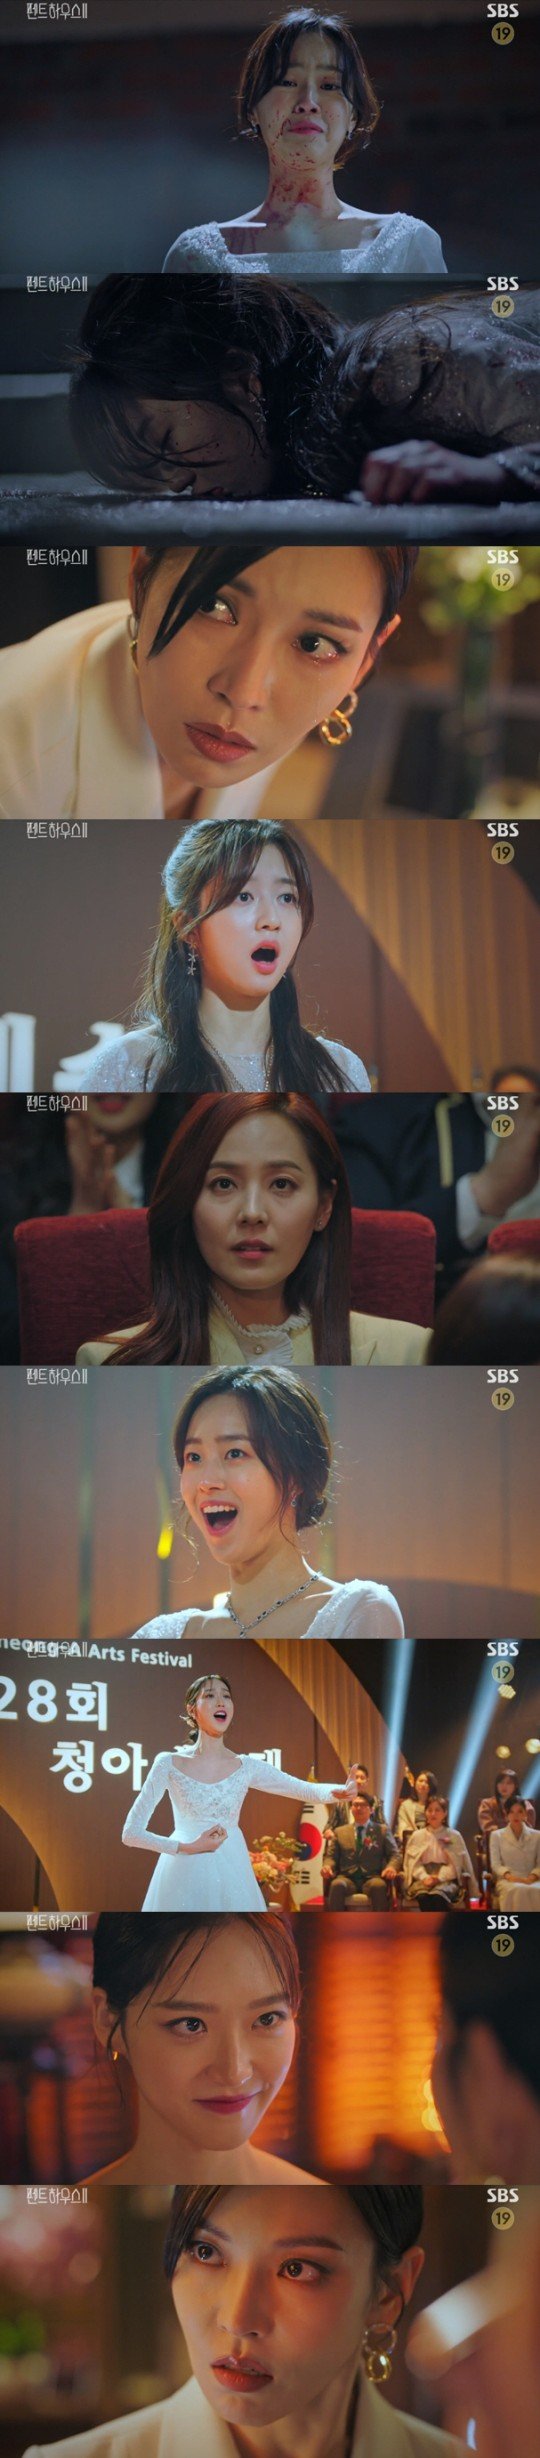 SBS 금토드라마 '펜트하우스2' 캡쳐